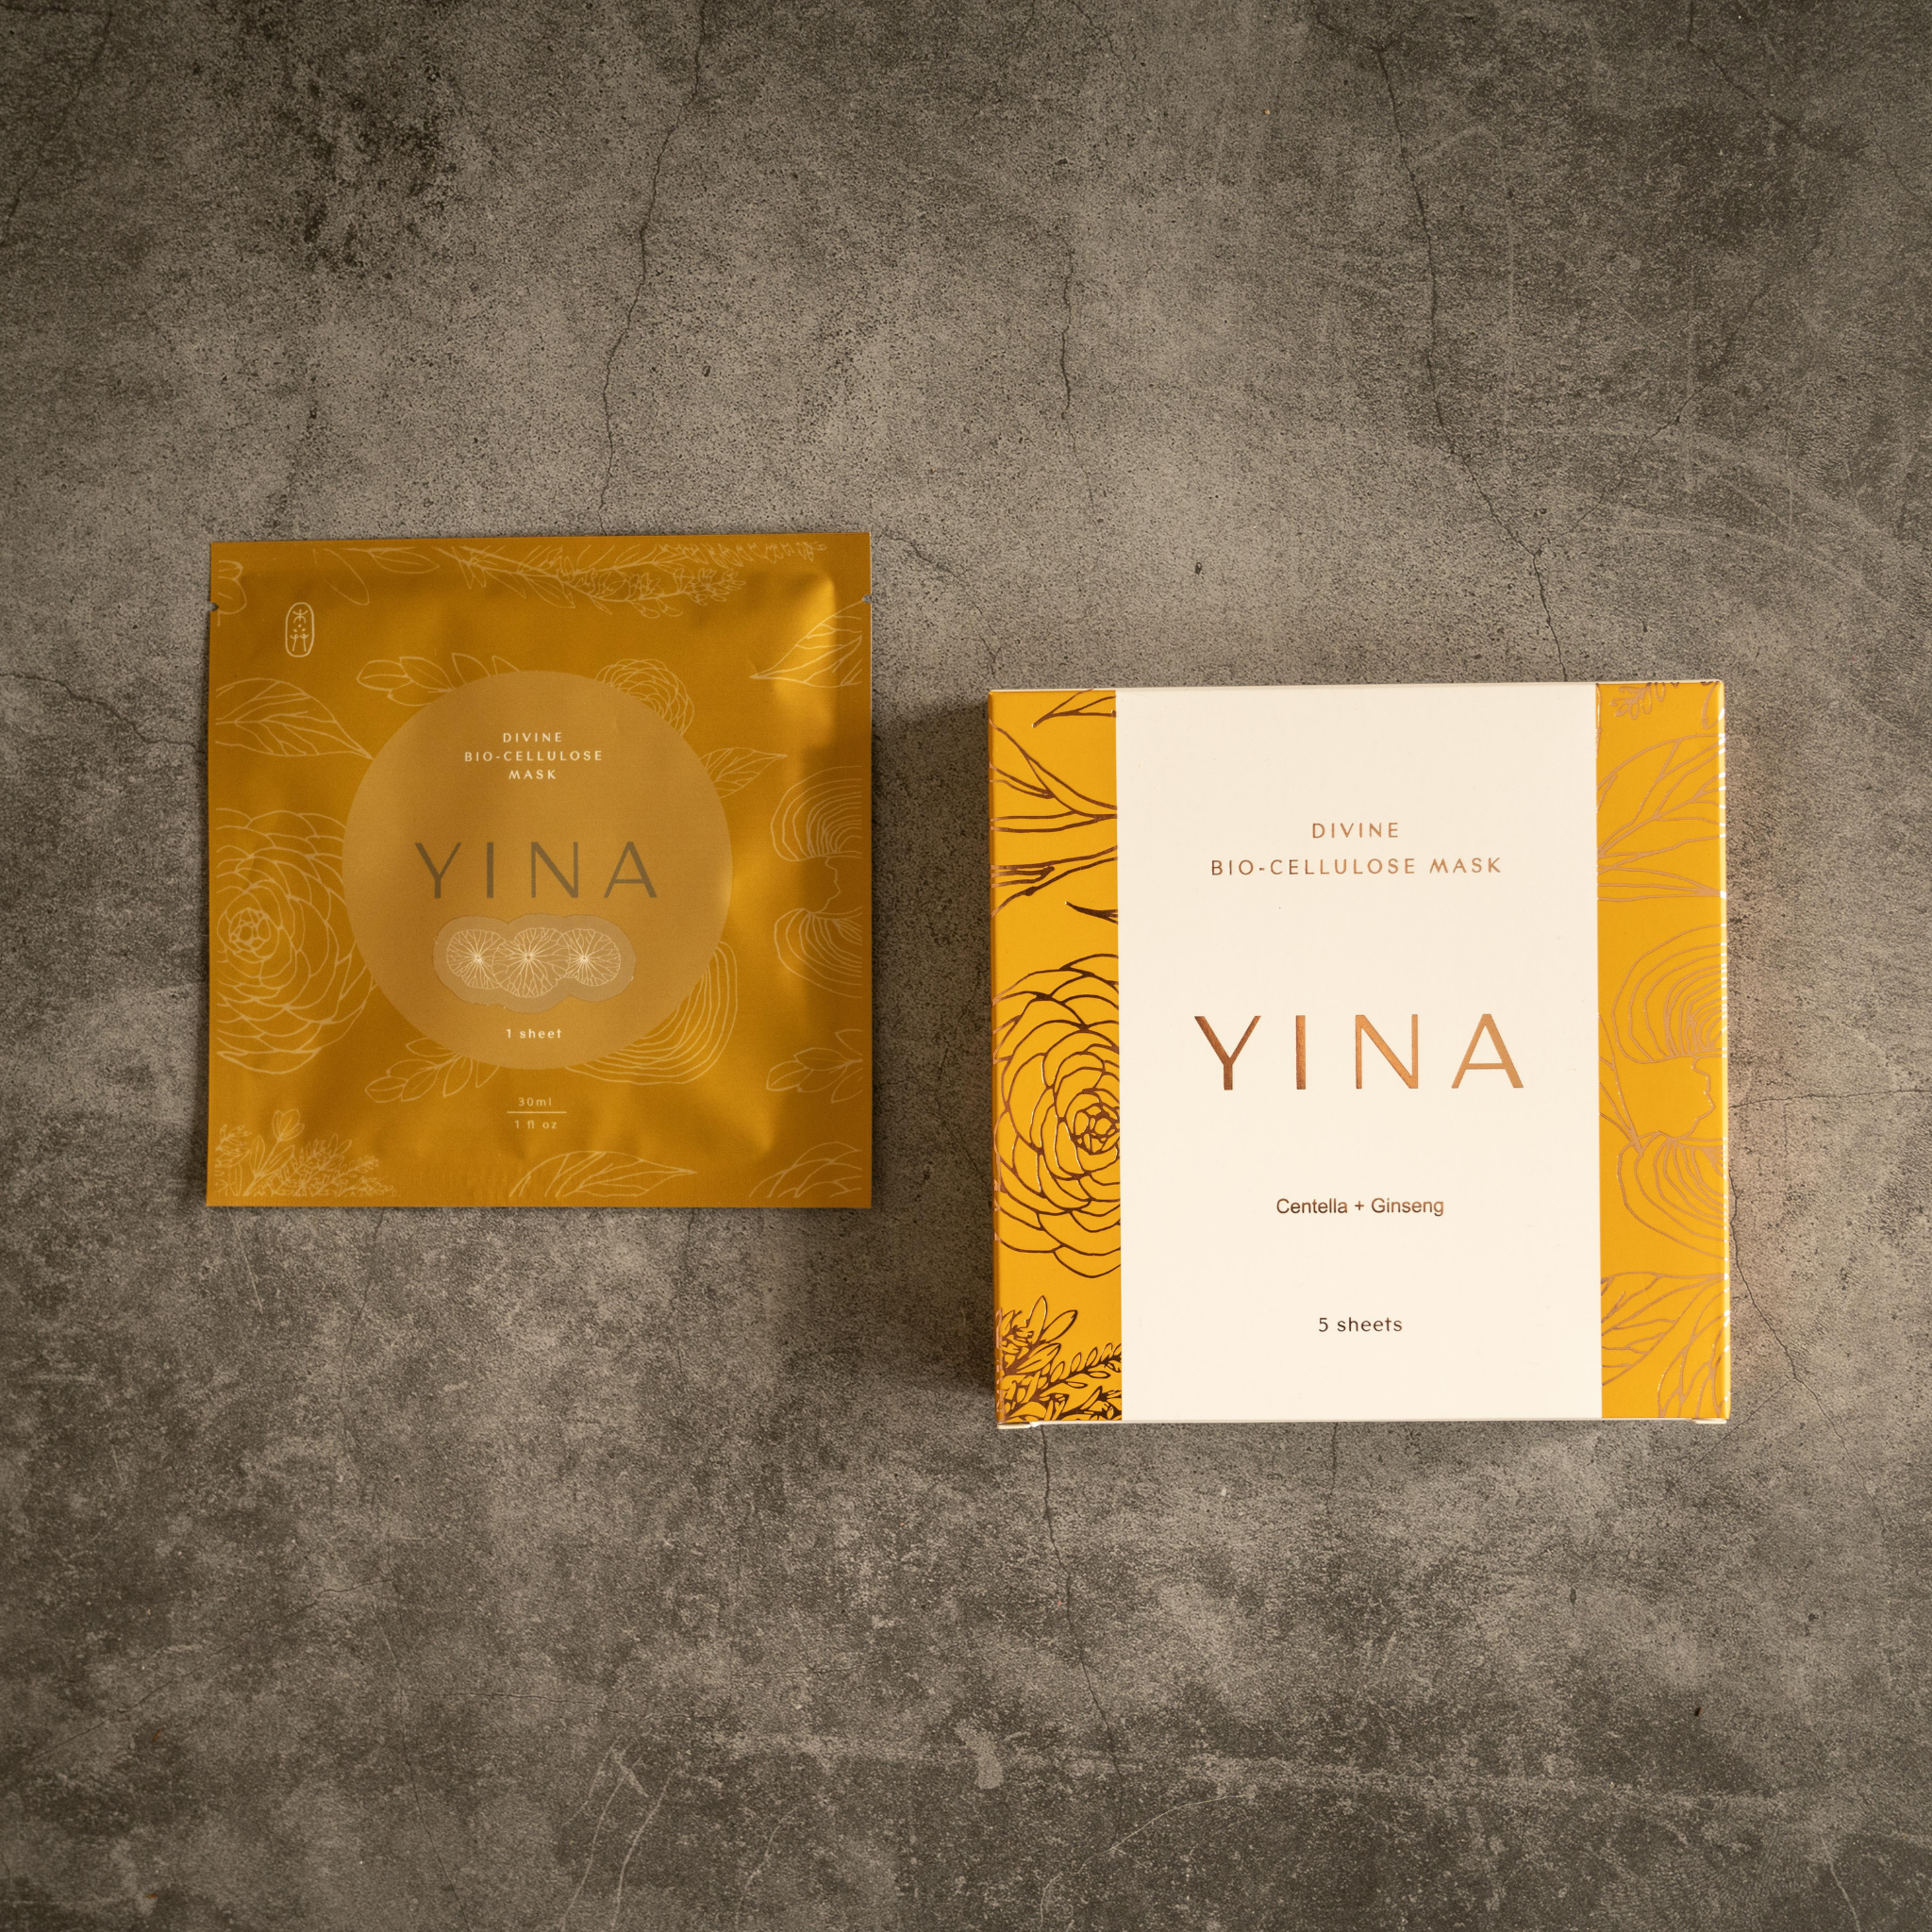 Yina Divine Bio-Cellulose Mask